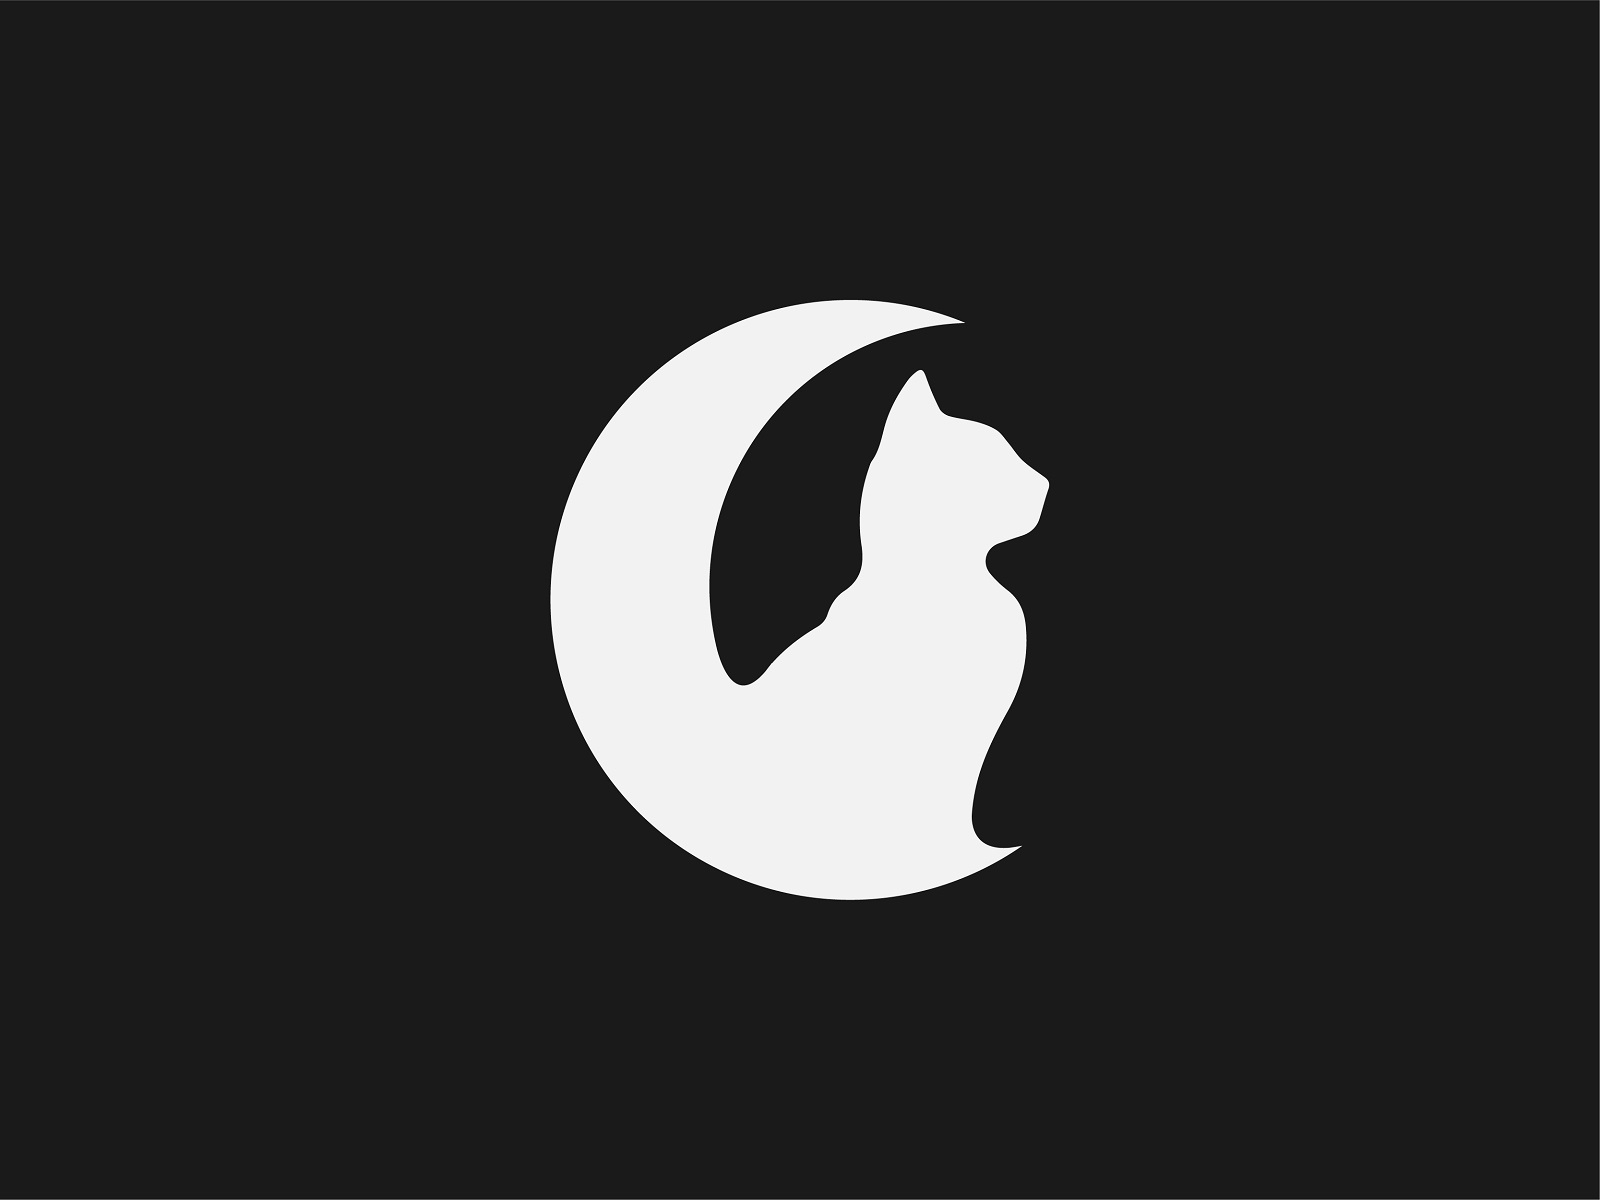 Cat Moon ll Logo Design by camdesign on Dribbble